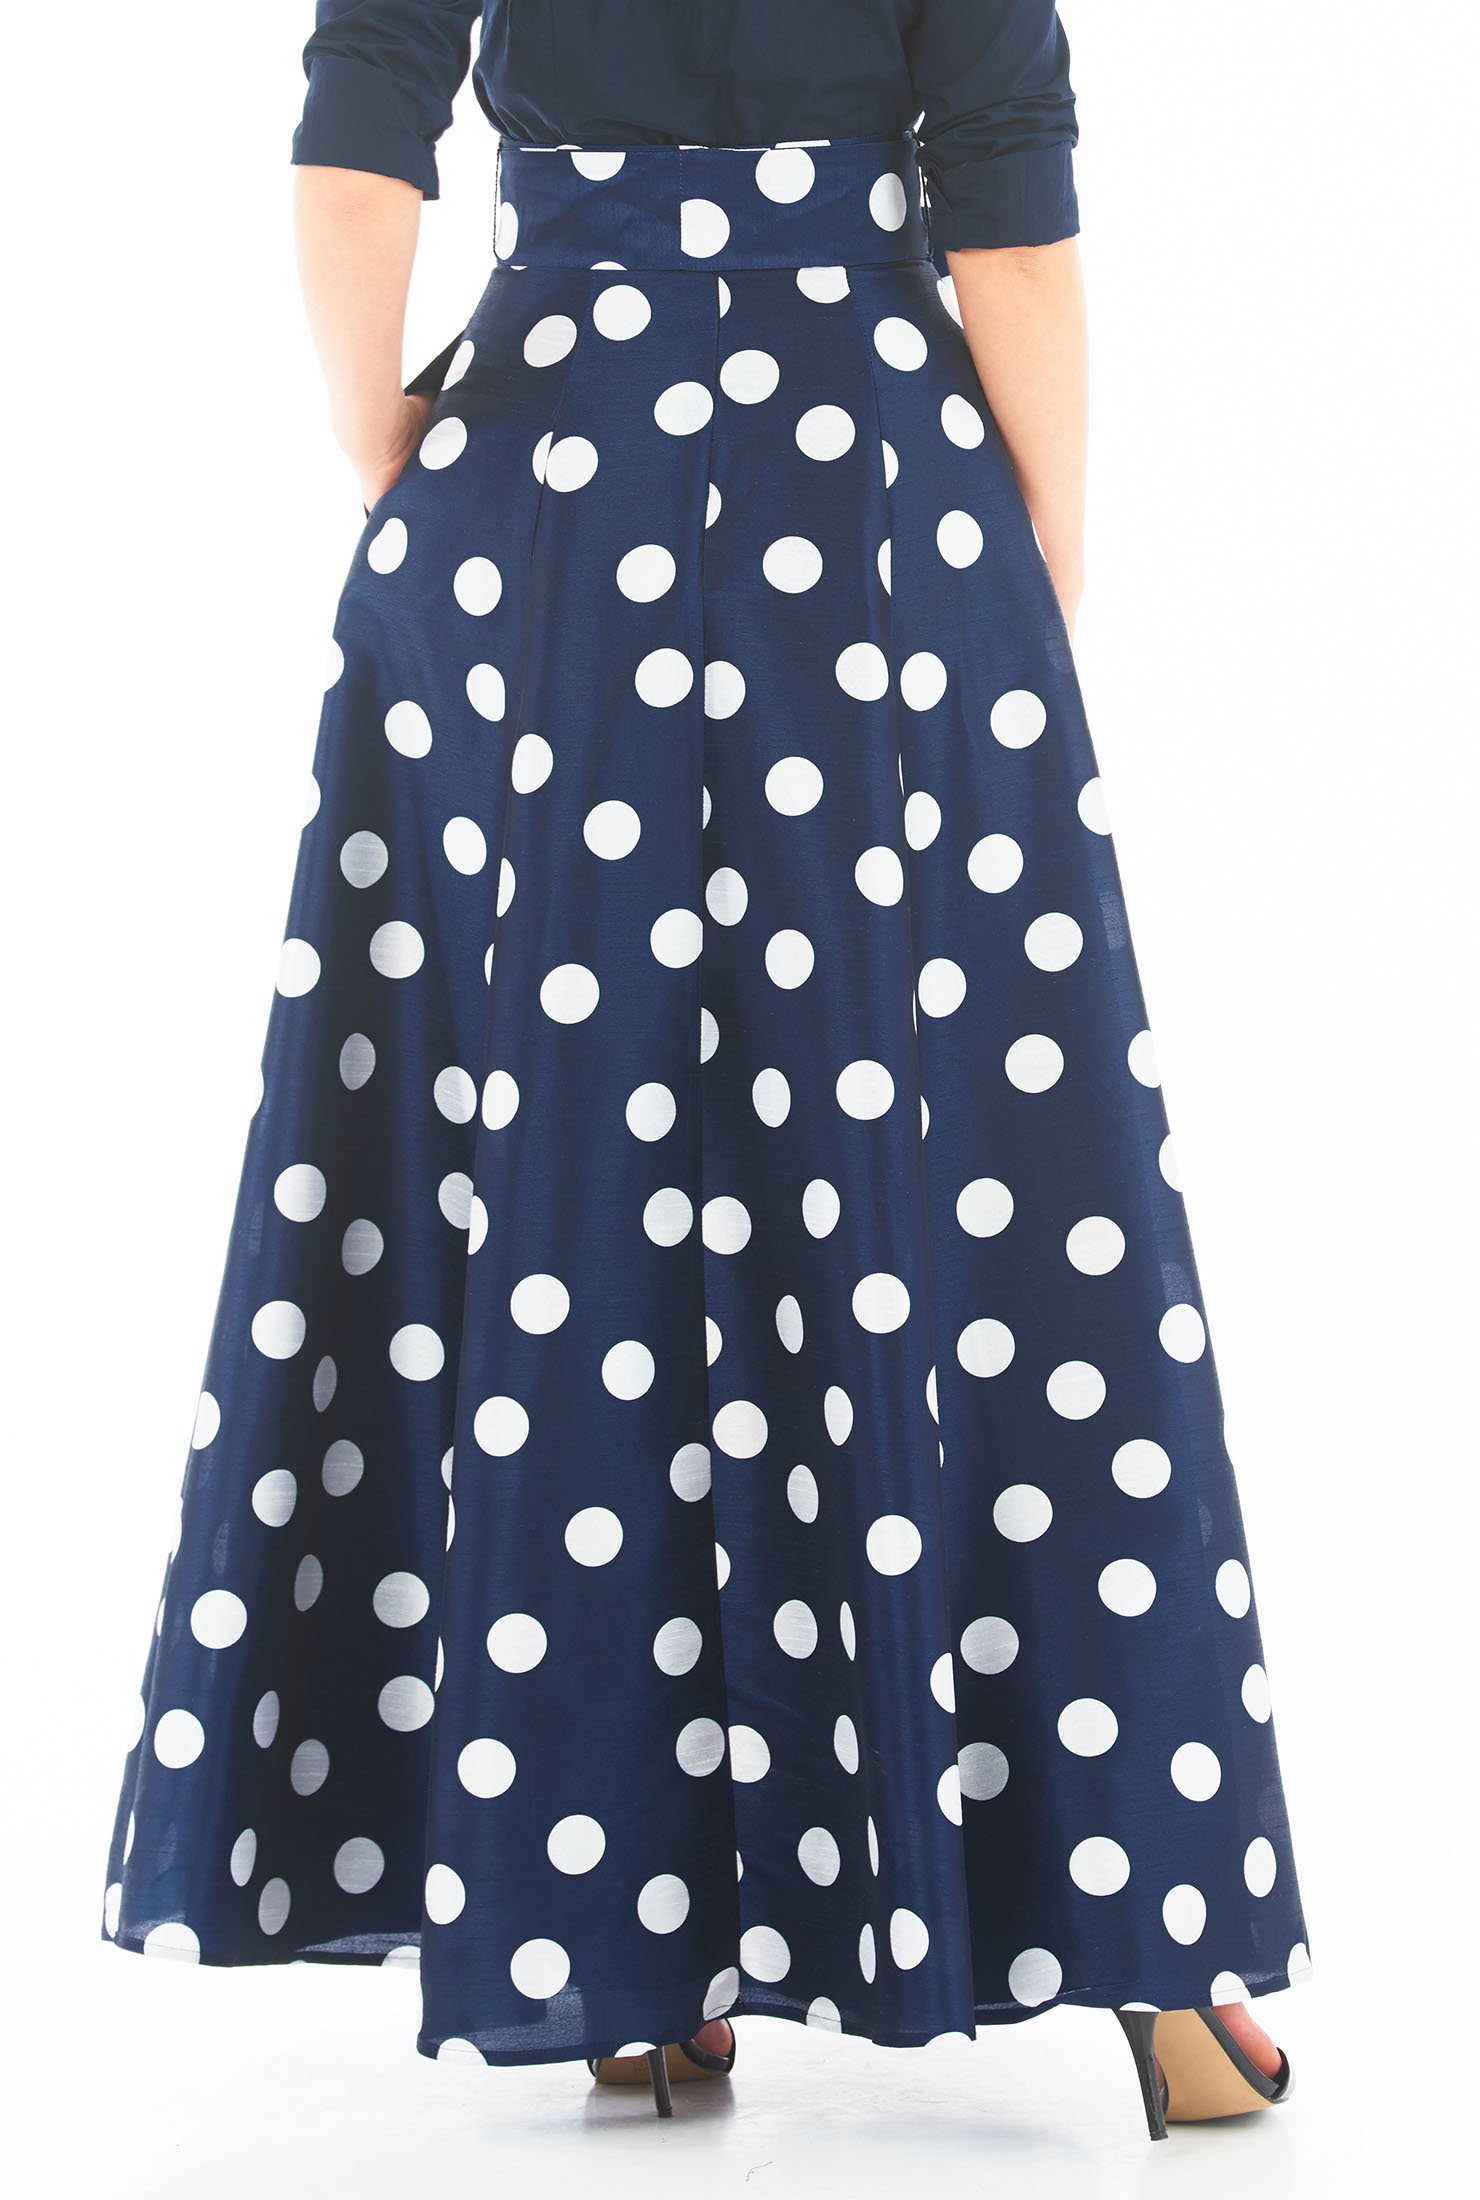 Shop Polka dot print dupioni maxi skirt | eShakti